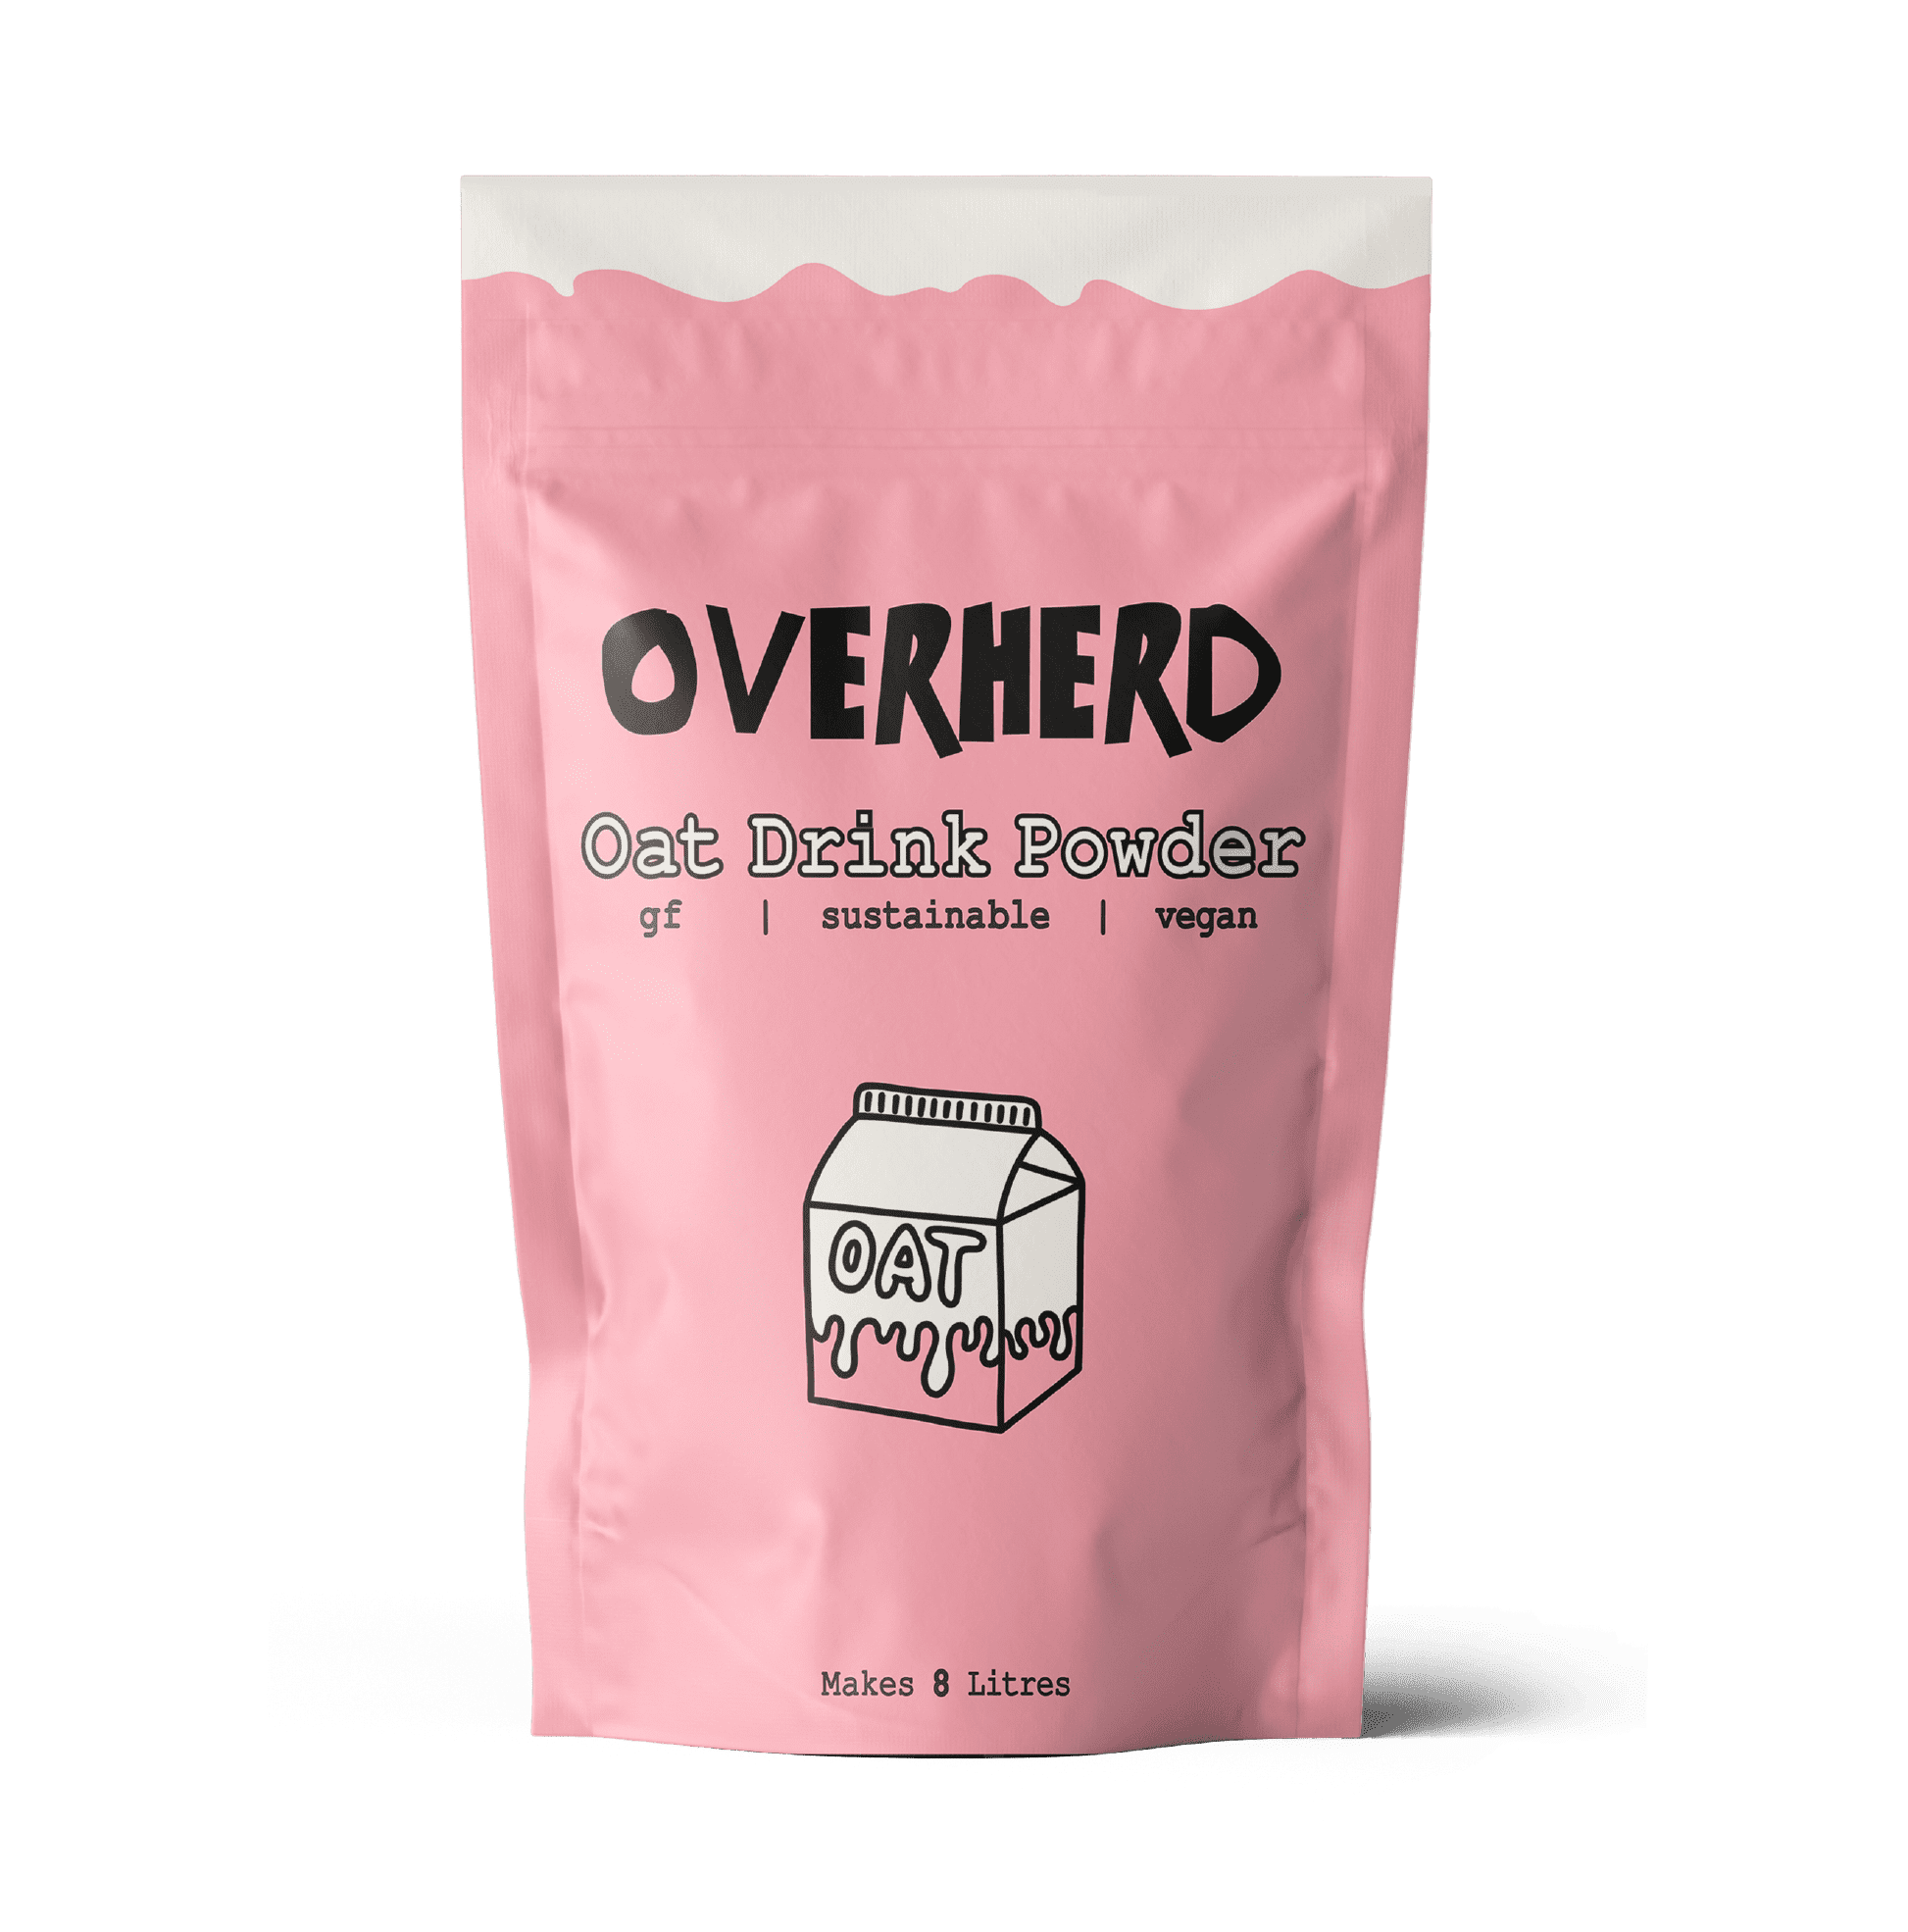 Powdered oat milk